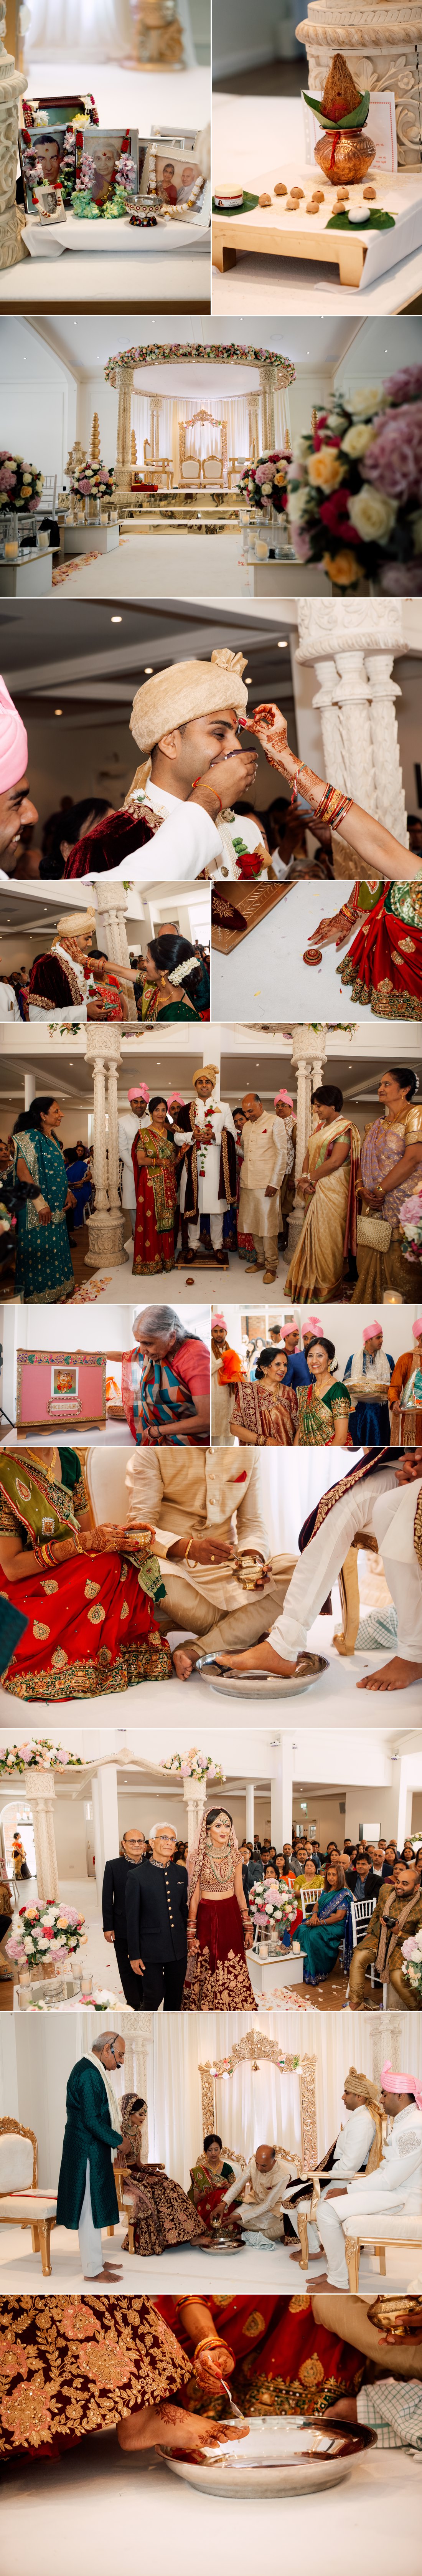 winstanley house - indian wedding photo 5